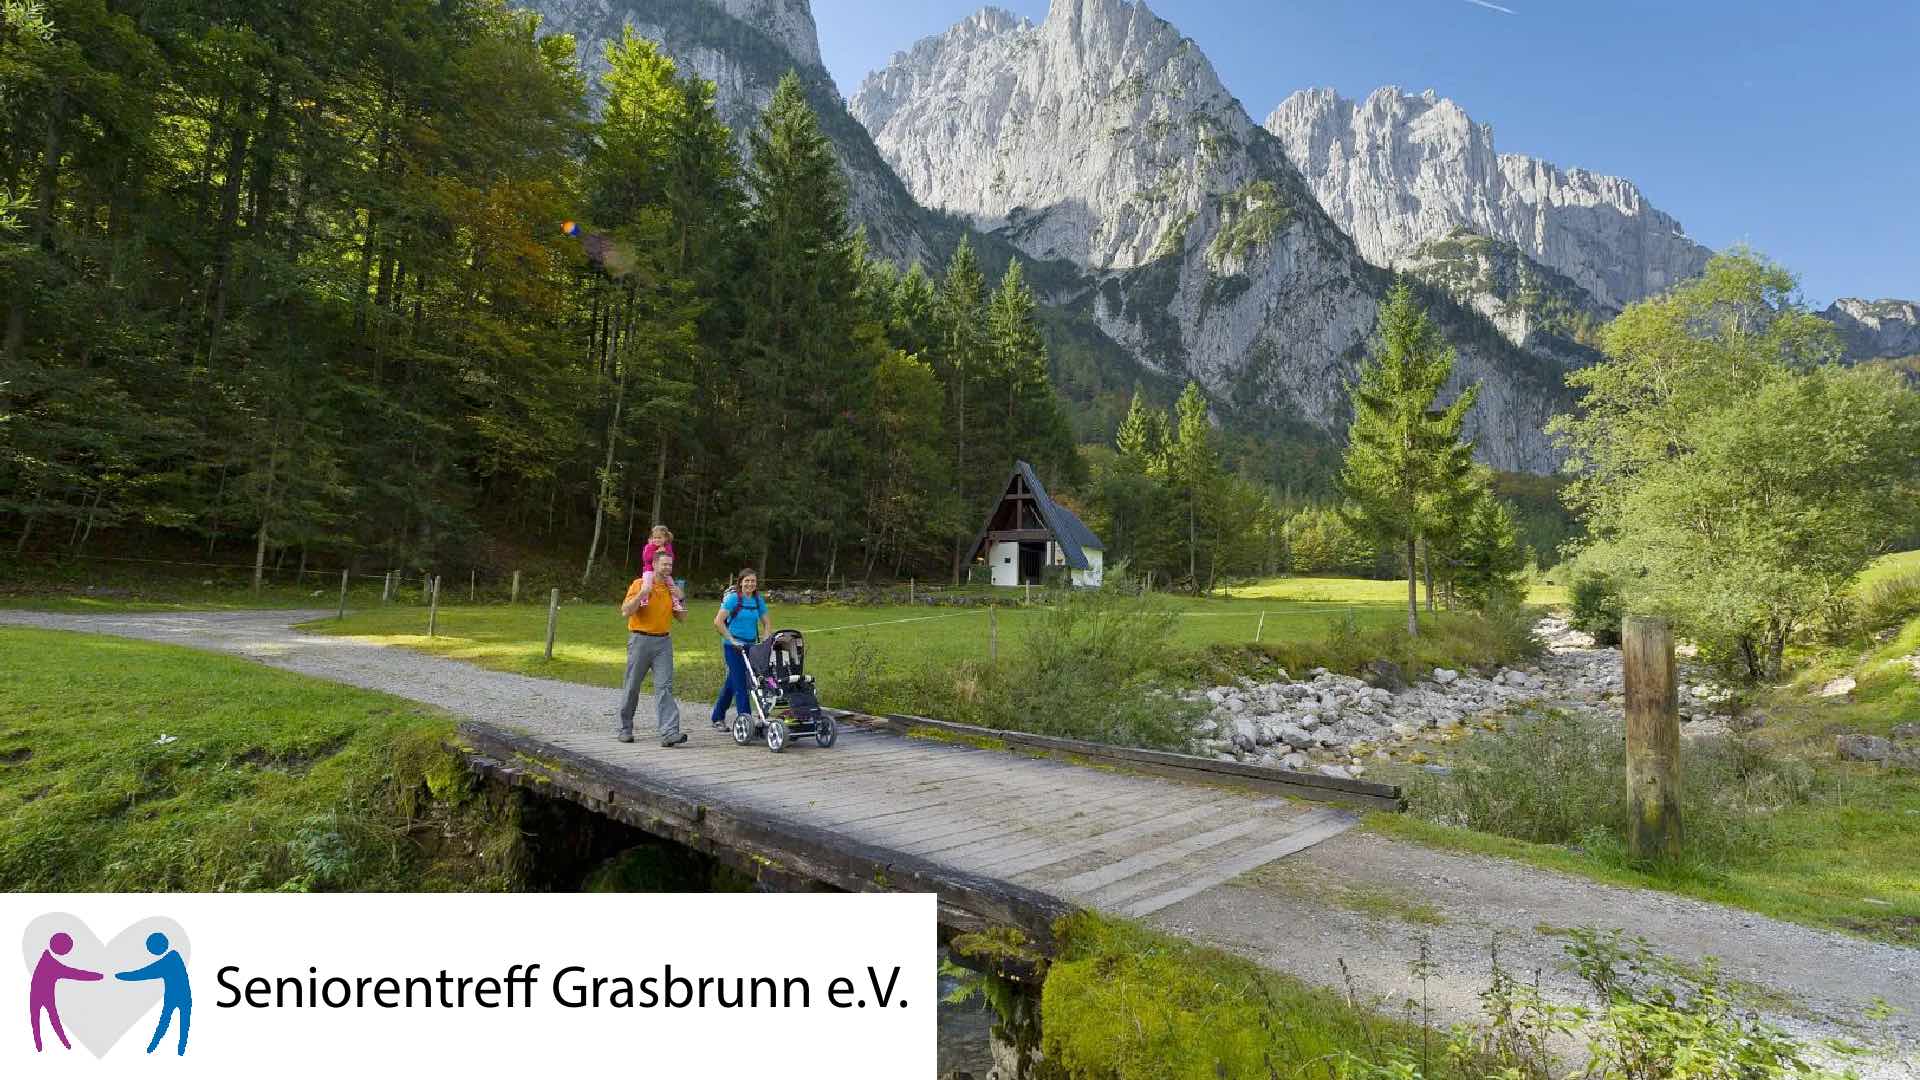 Tagesausflug ins Kaiserbachtal/St. Johann mit dem Seniorentreff Grasbrunn e.V.